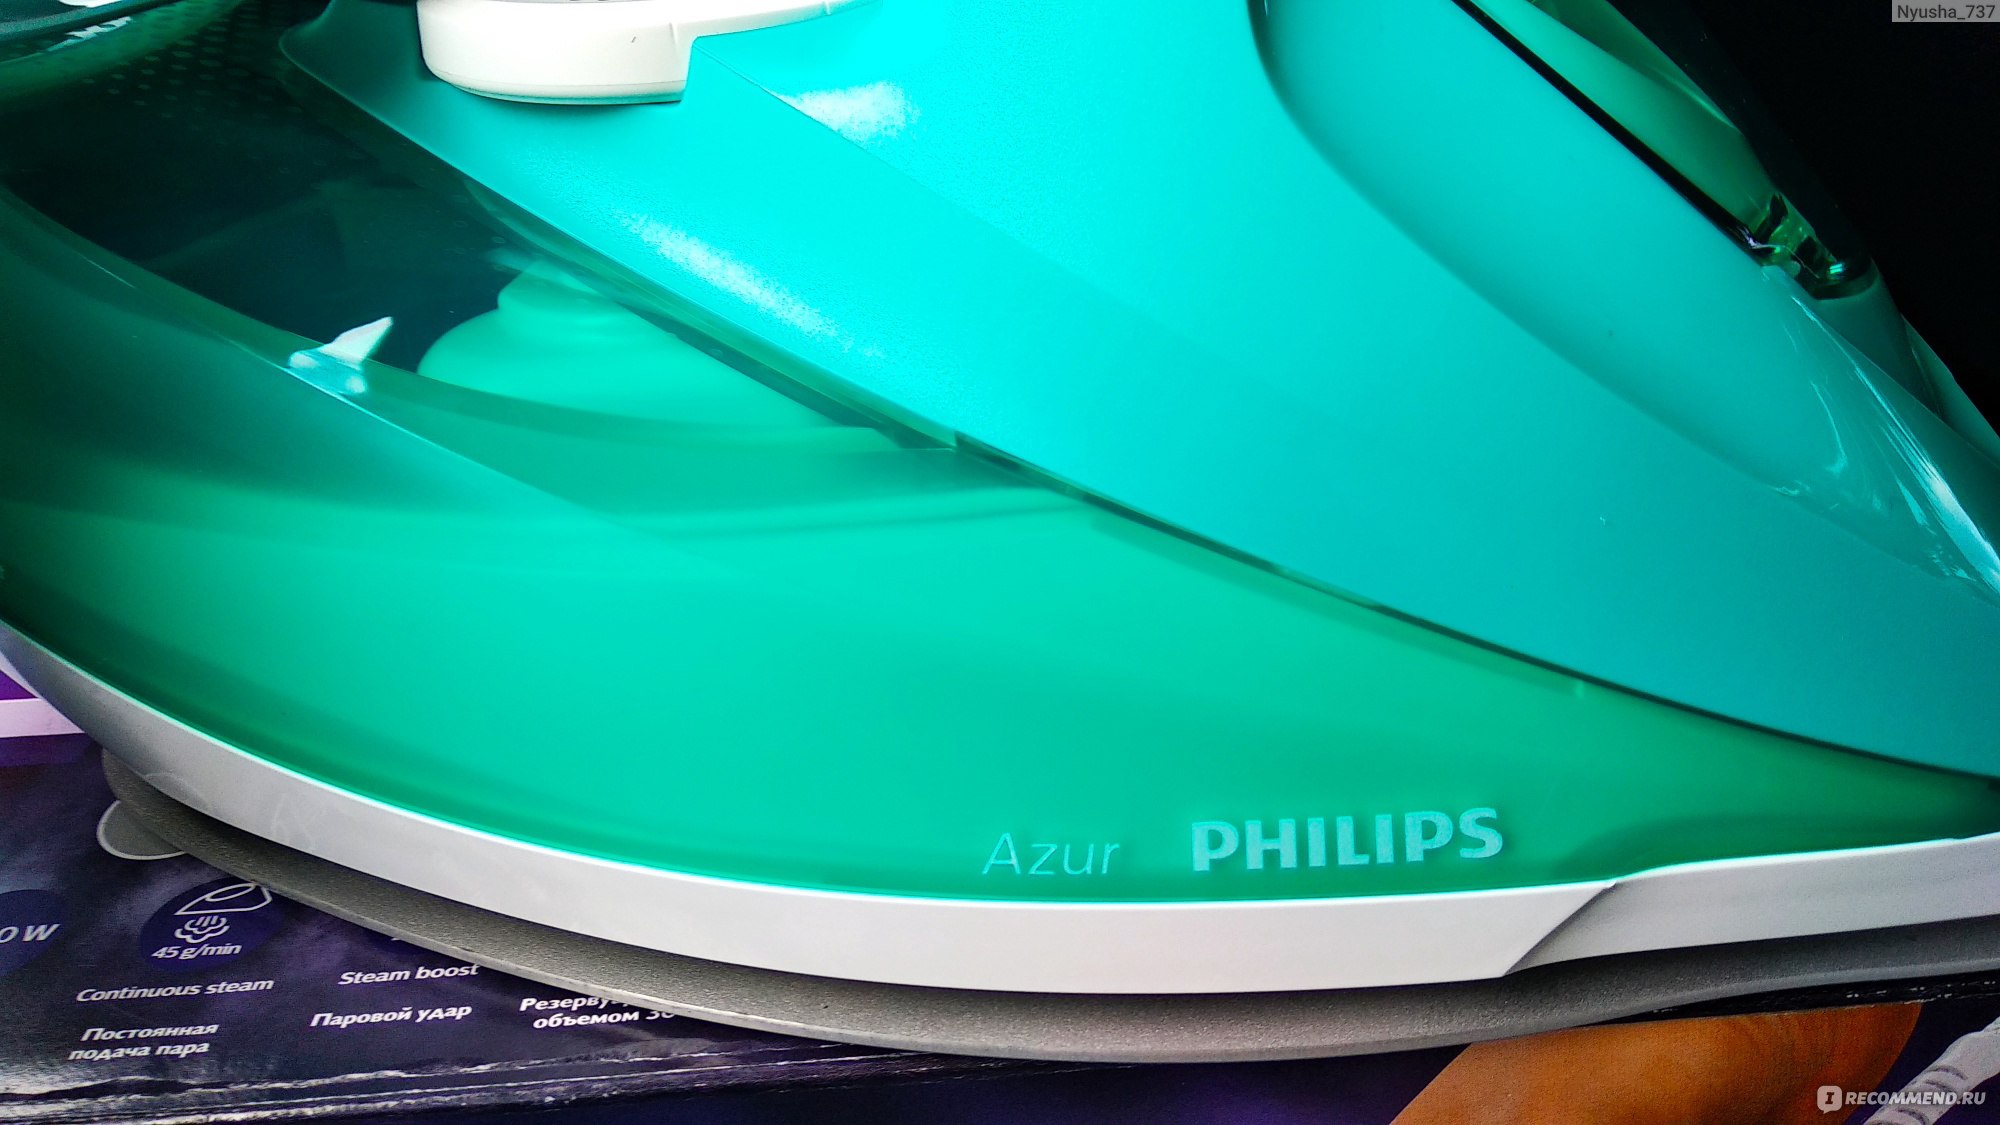 Утюг Philips gc4537/70. Philips gc4537/70 Azur. Утюг Philips GC 4537. Утюг Philips gc4537/70 Azur, белый/зеленый. Azur gc5039